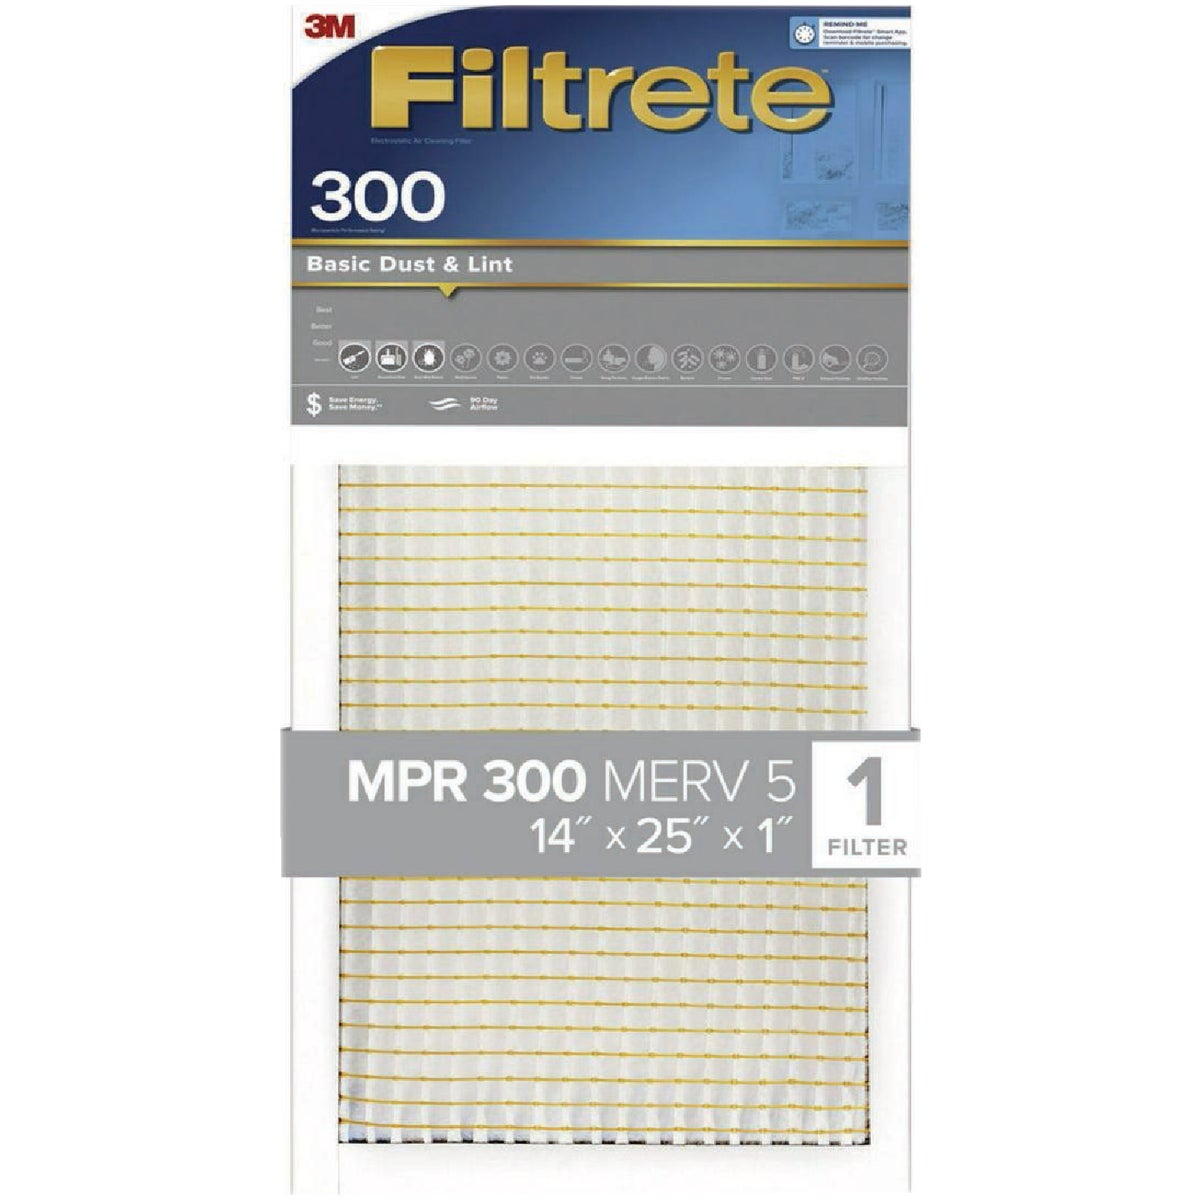 Filtrete 14 In. x 25 In. x 1 In. Basic Dust & Lint 300 MPR Furnace Filter